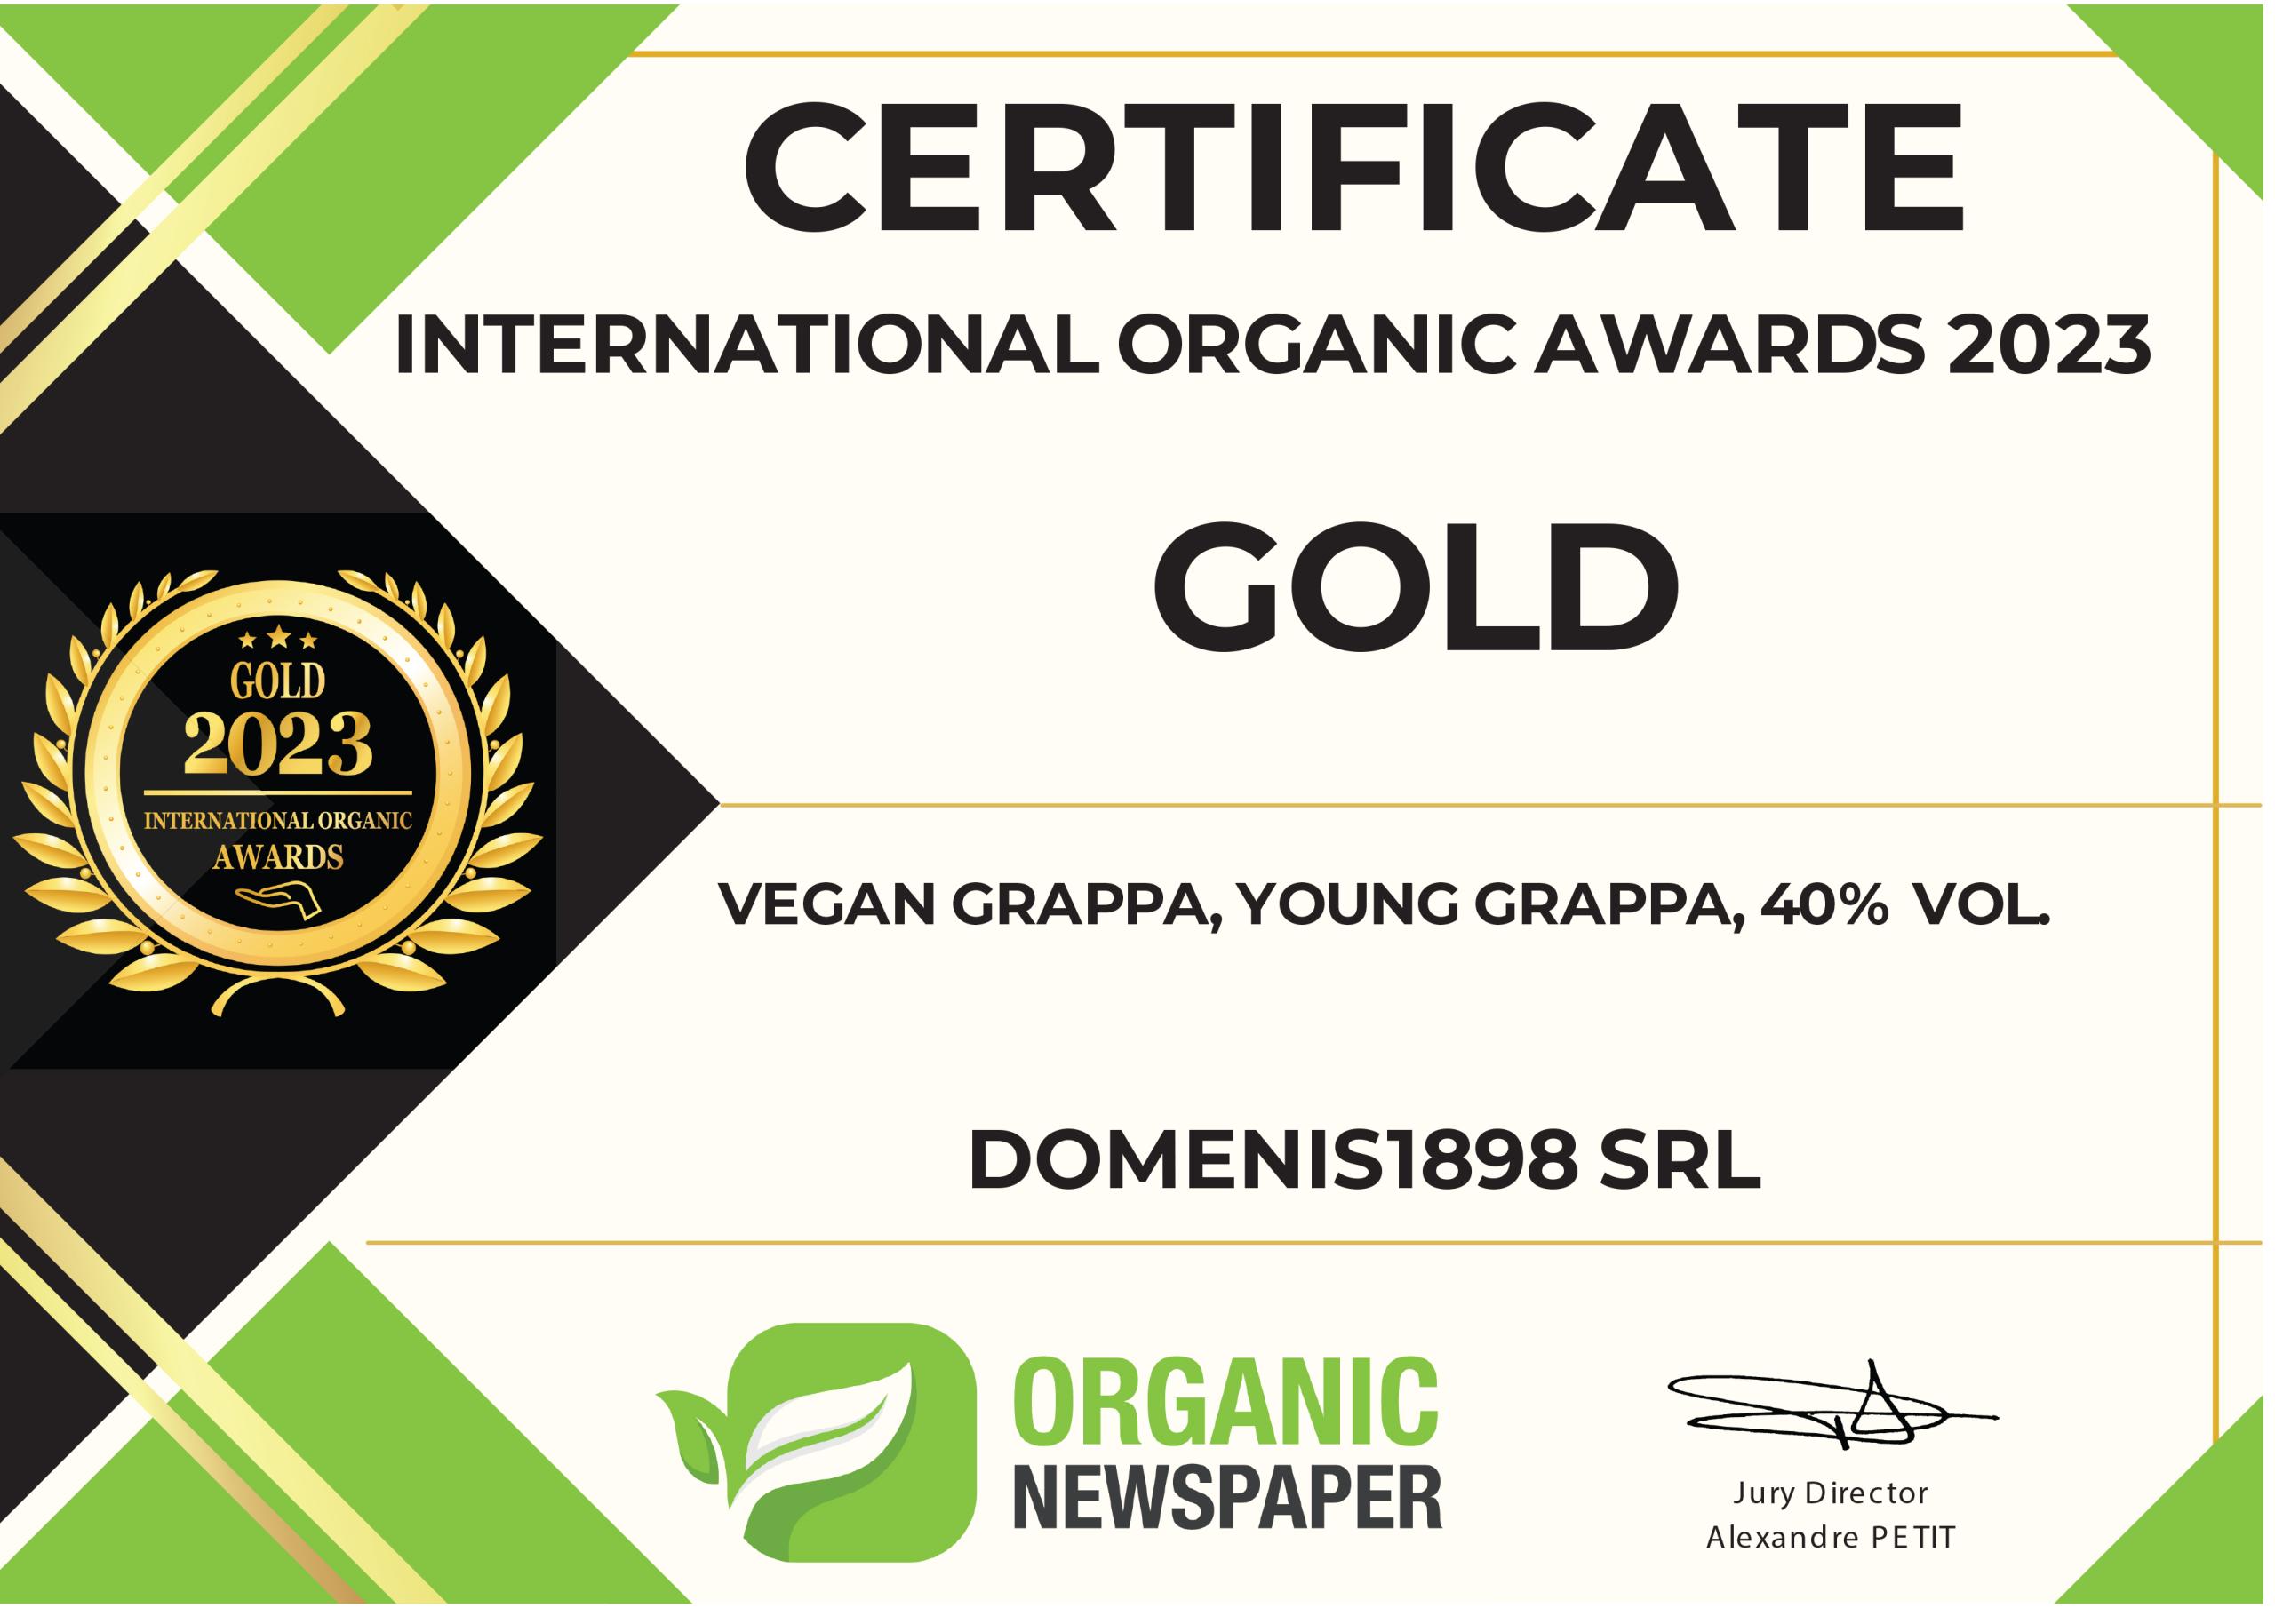 International Organic Awards 2023 – Gold Award – Vegan Grappa